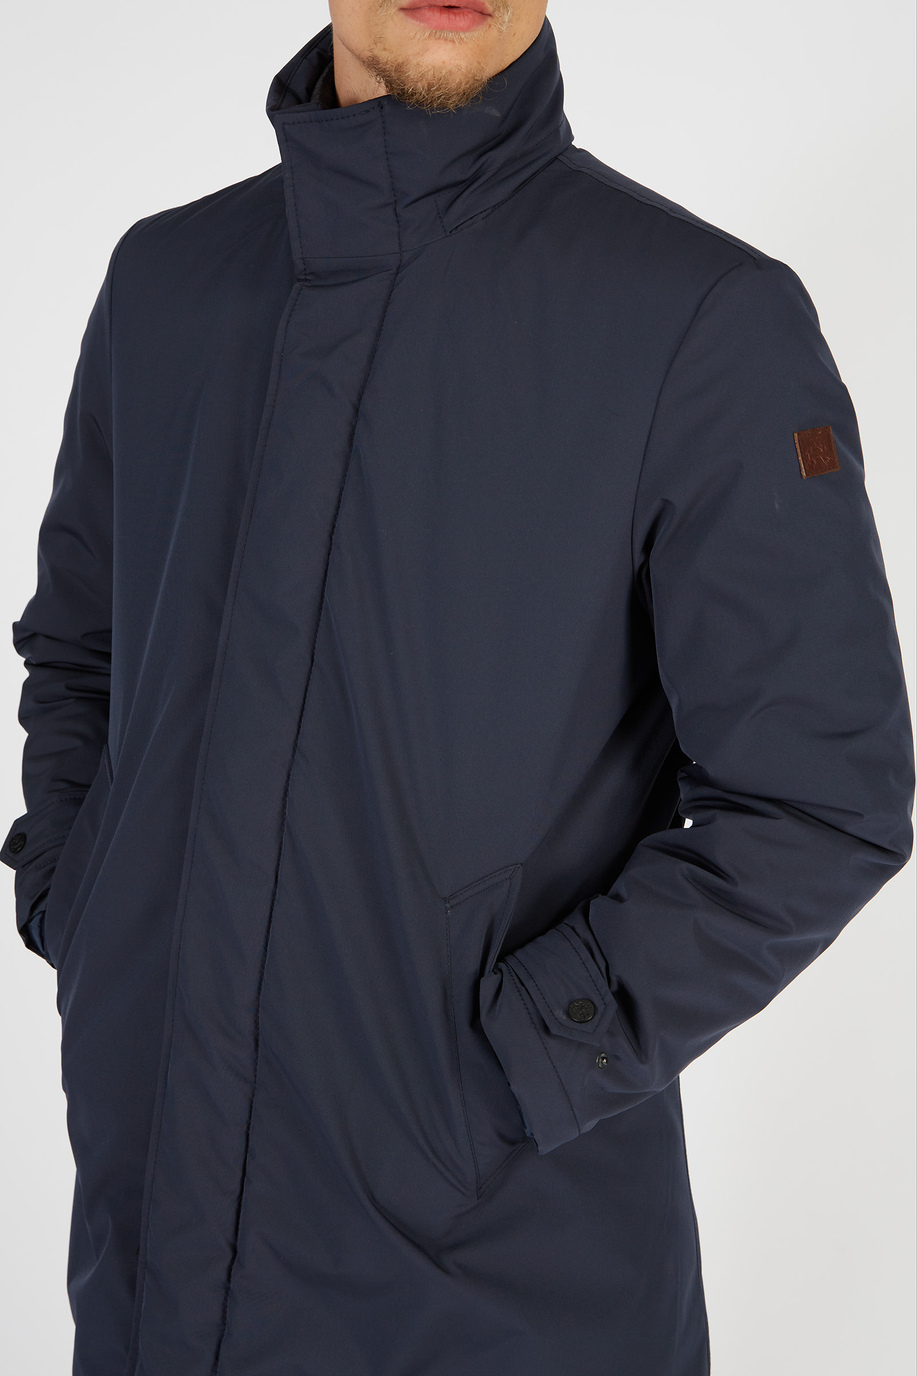 Men’s Blue Ribbon jacket in regular fit nylon - Outerwear | La Martina - Official Online Shop